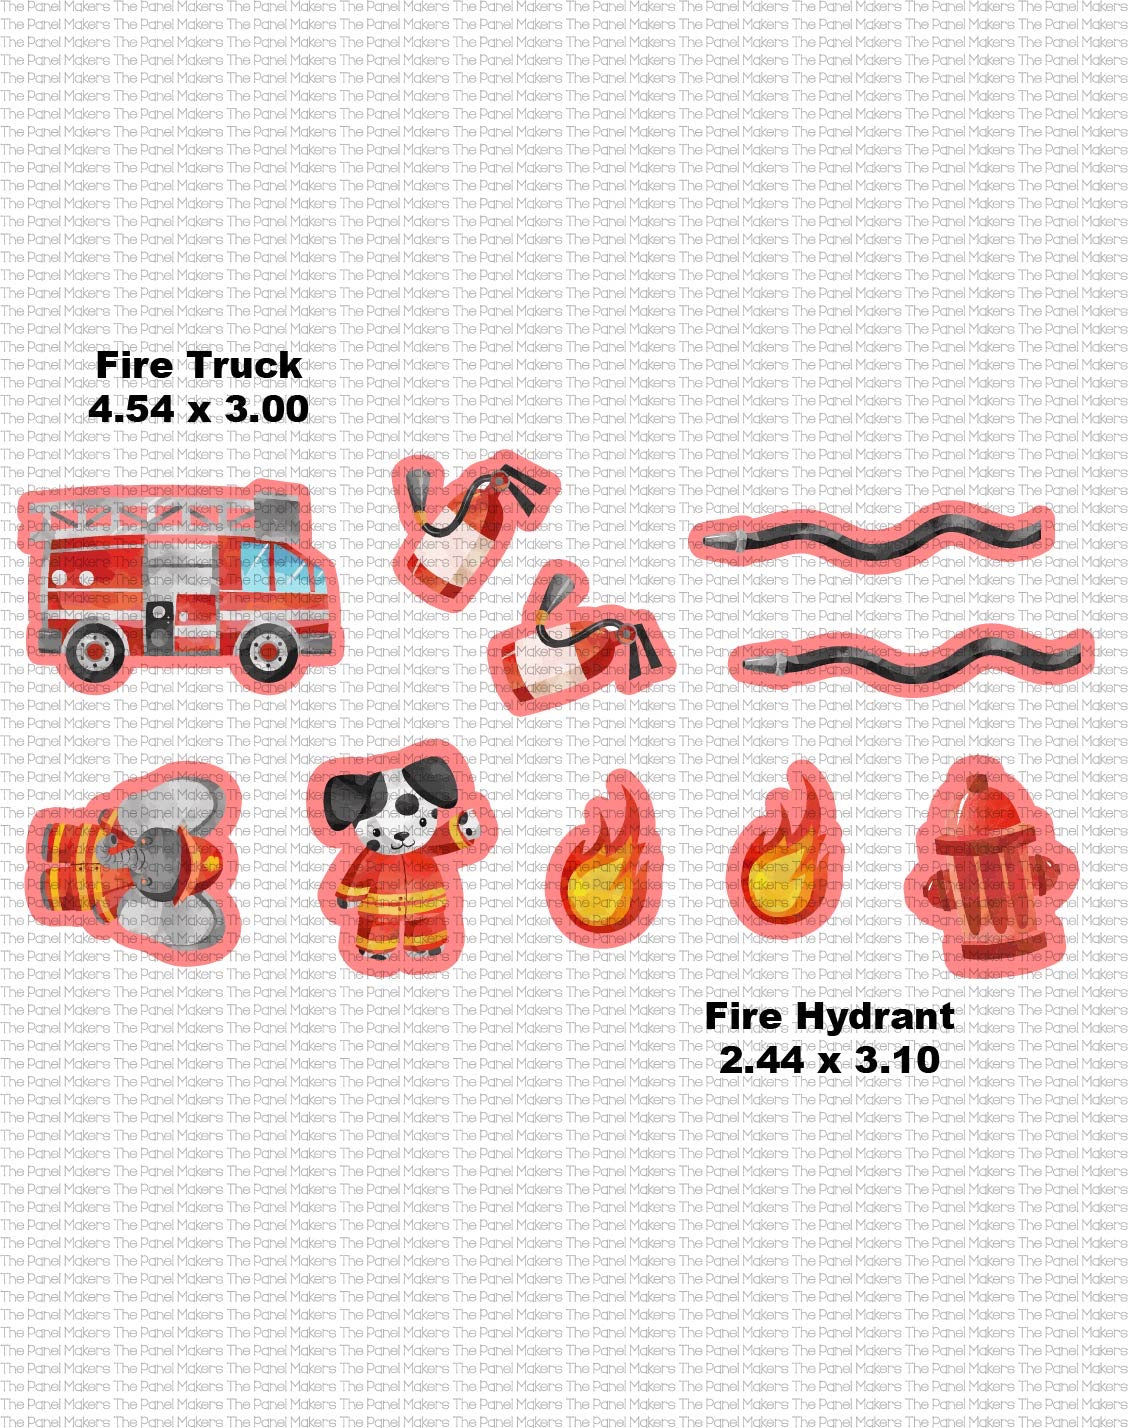 Fire Department panel